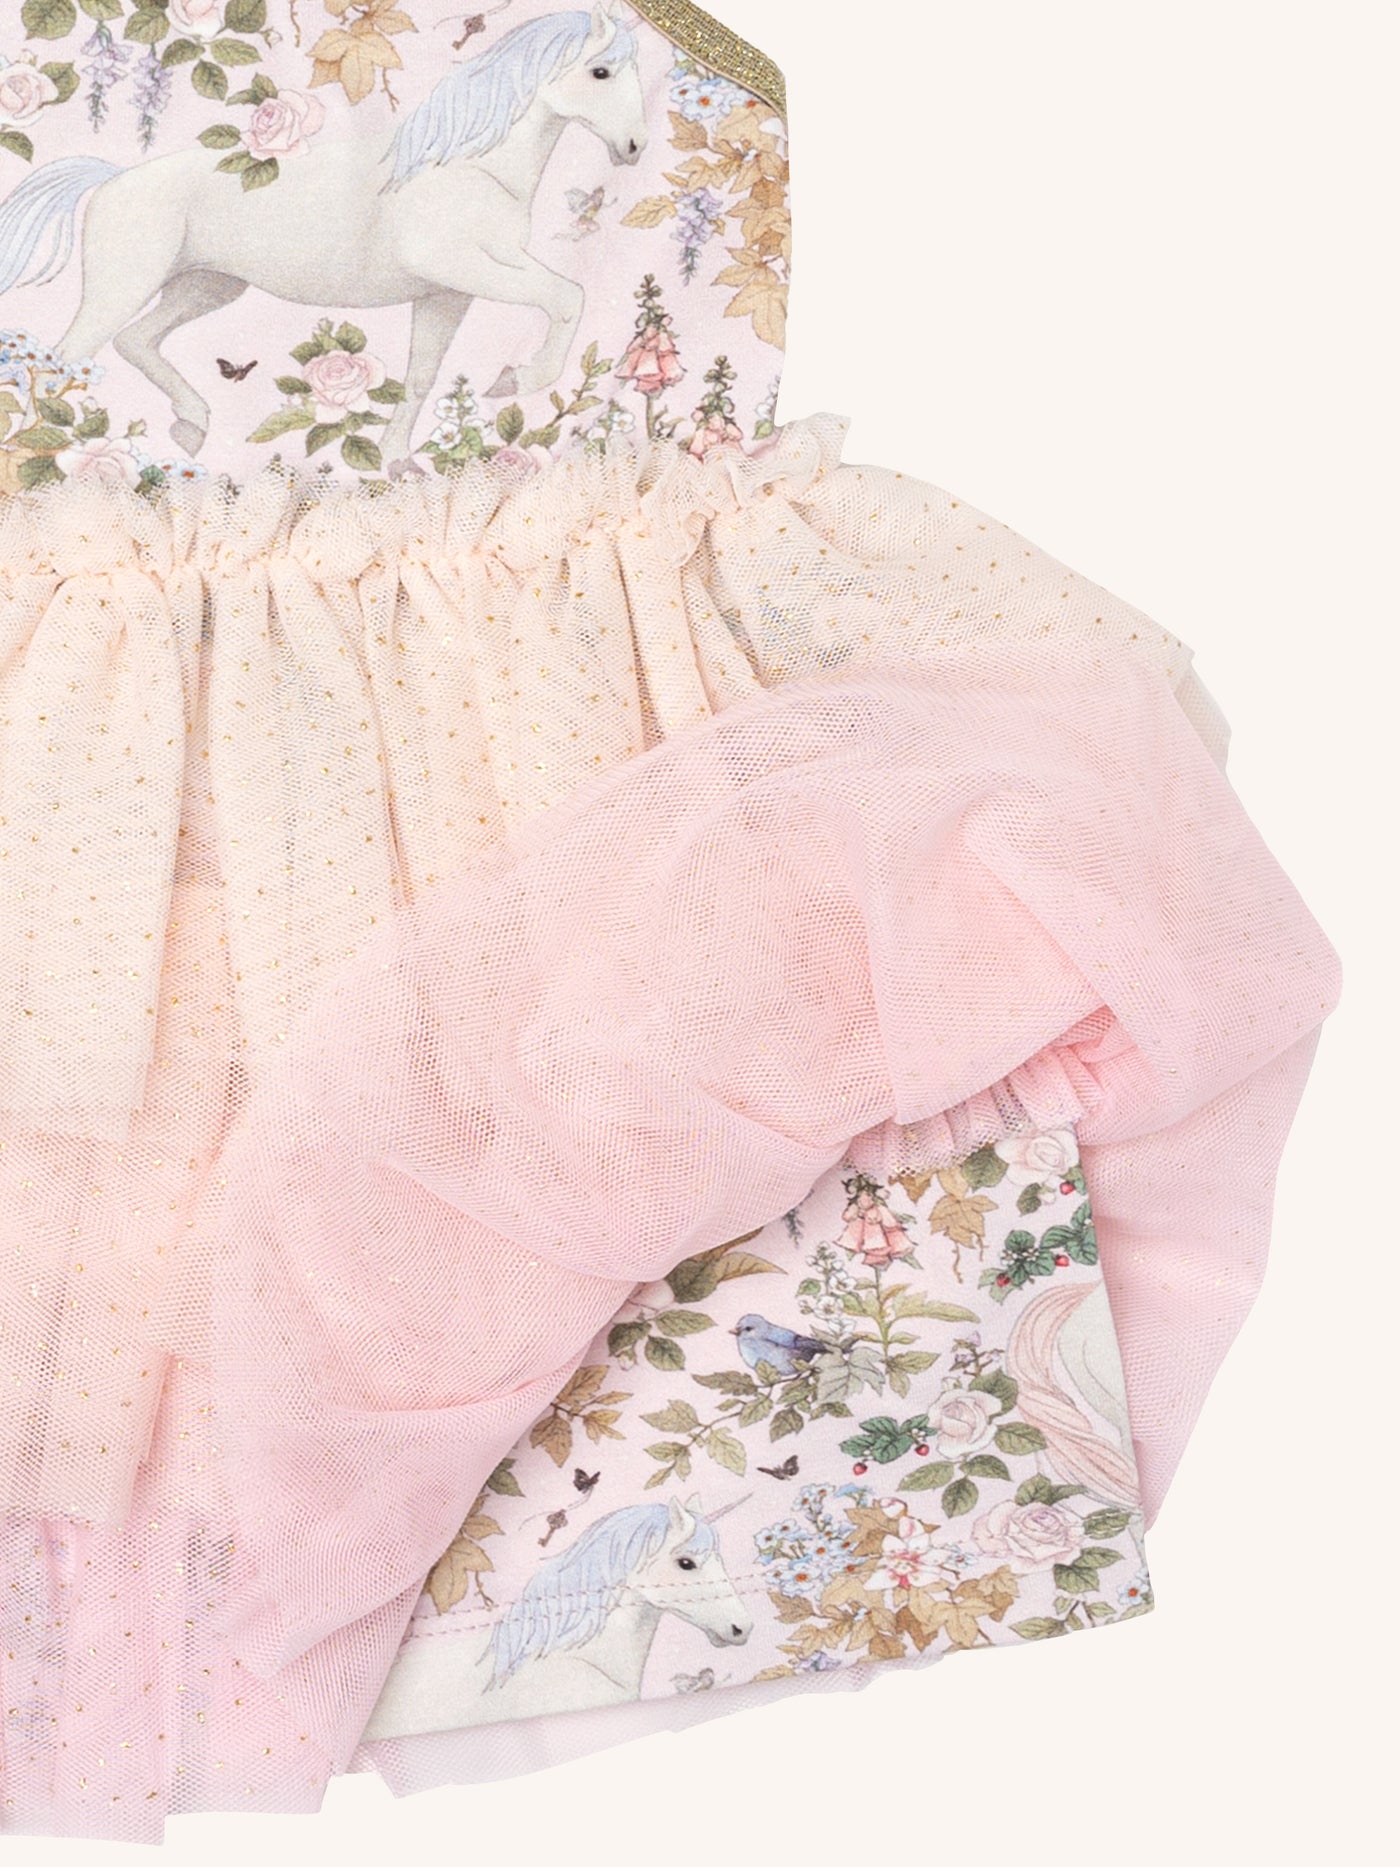 'Field of Dreams' Flutter Tutu Dress - Baby - Candy Pink